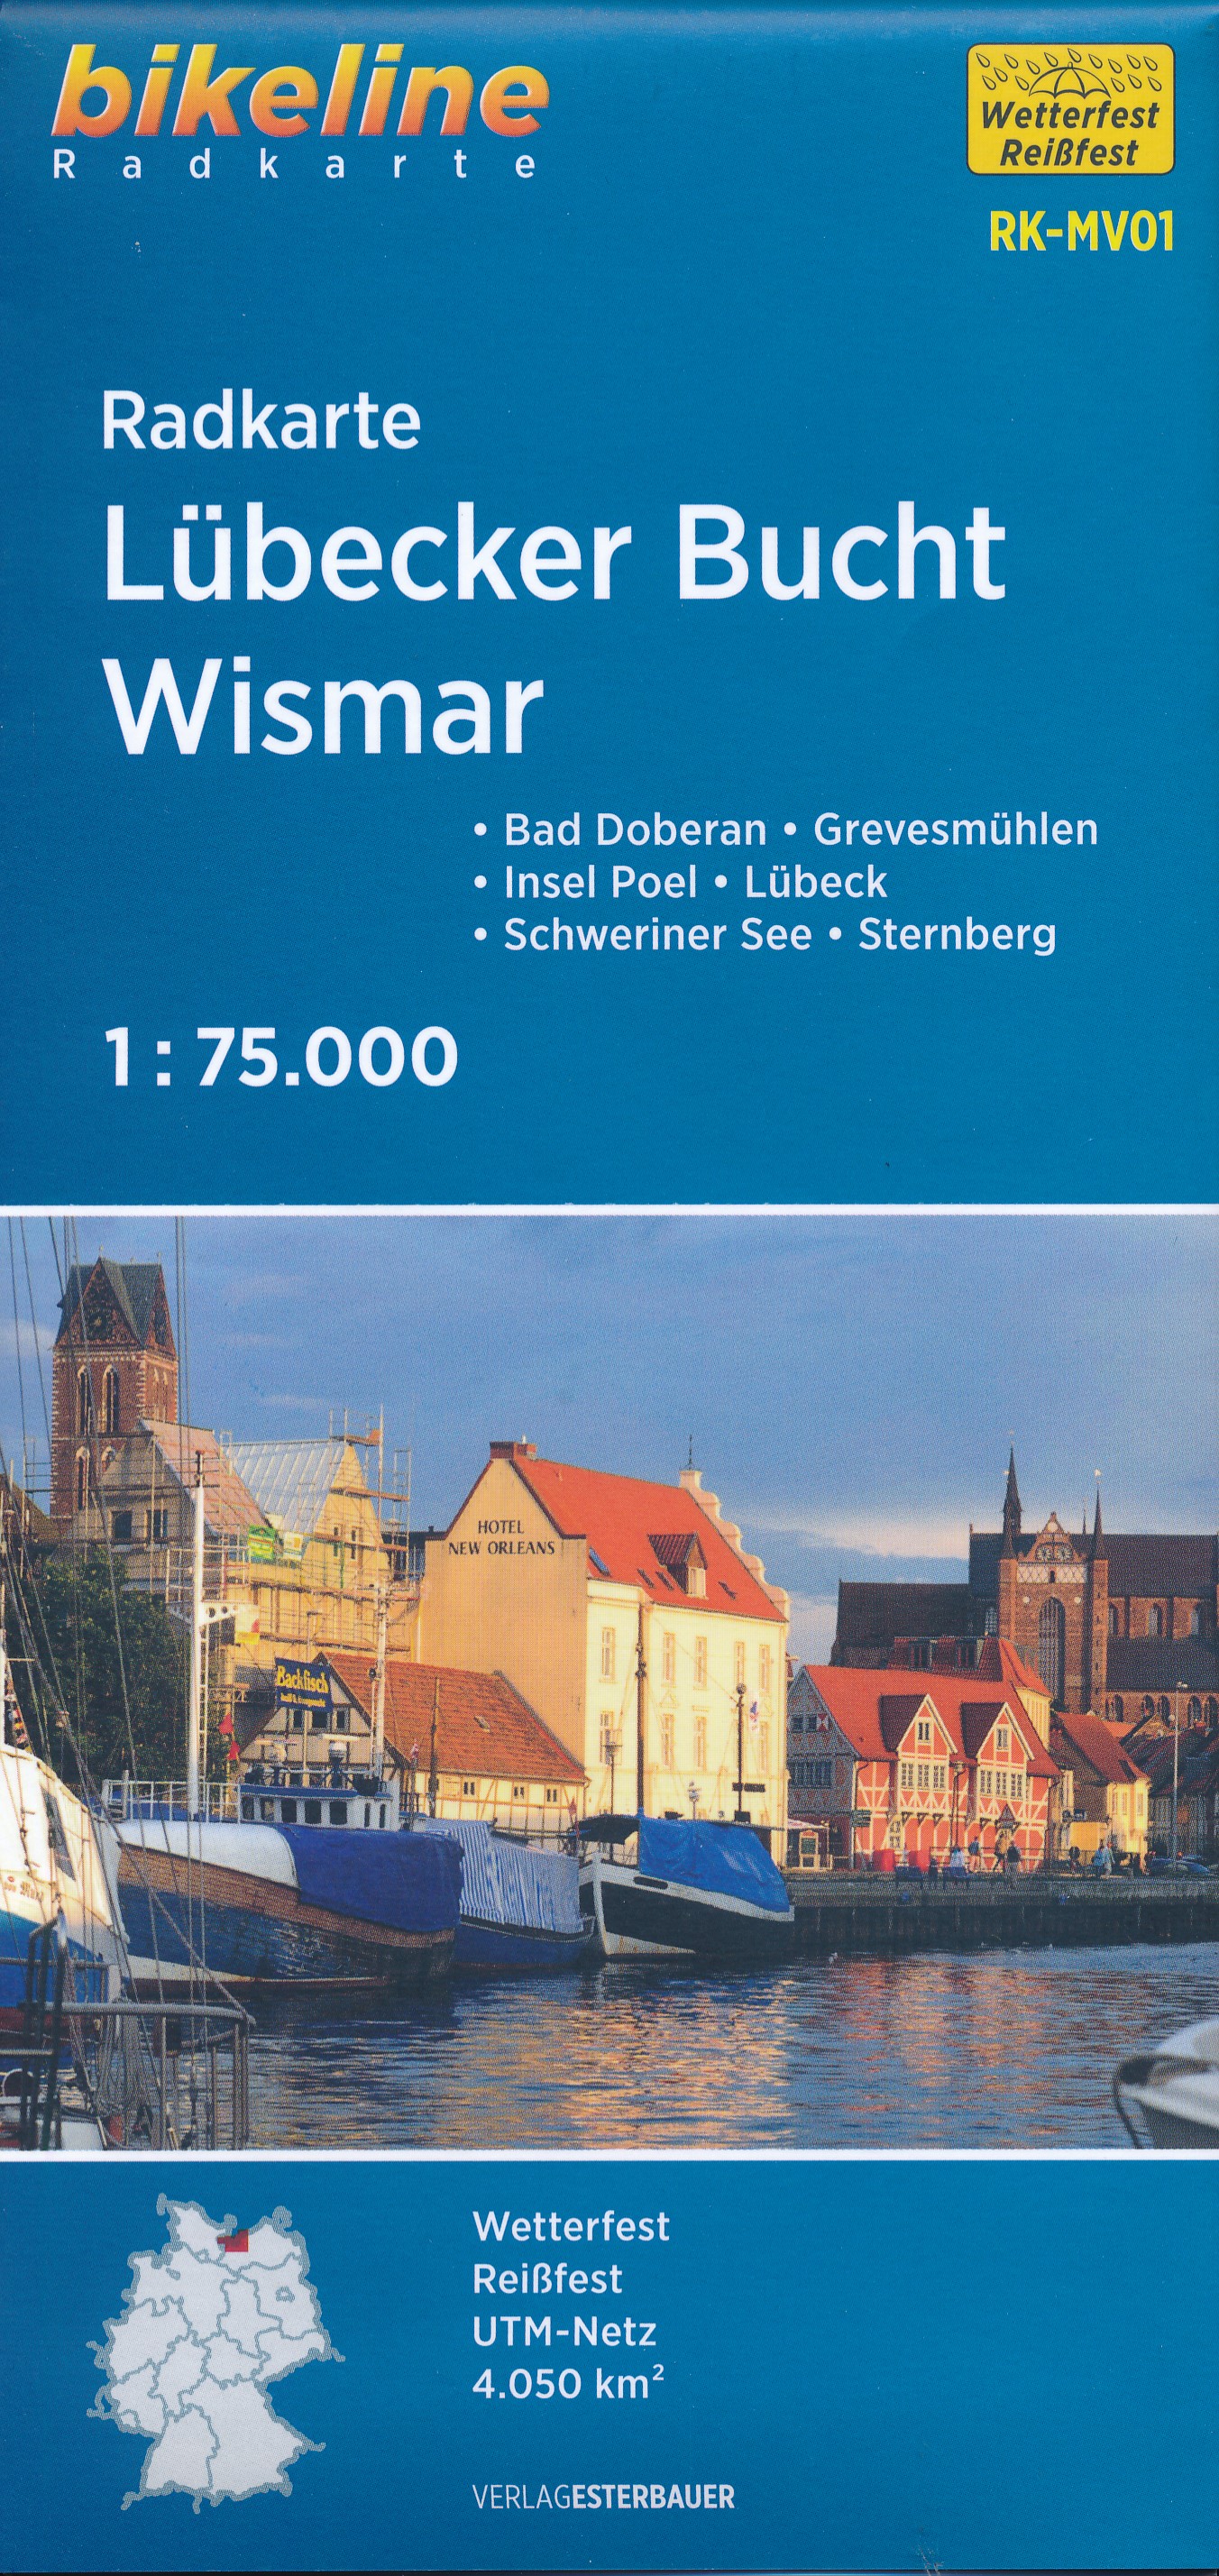 Online bestellen: Fietskaart MV01 Bikeline Radkarte Radkarte Lübecker Bucht, Wismar | Esterbauer